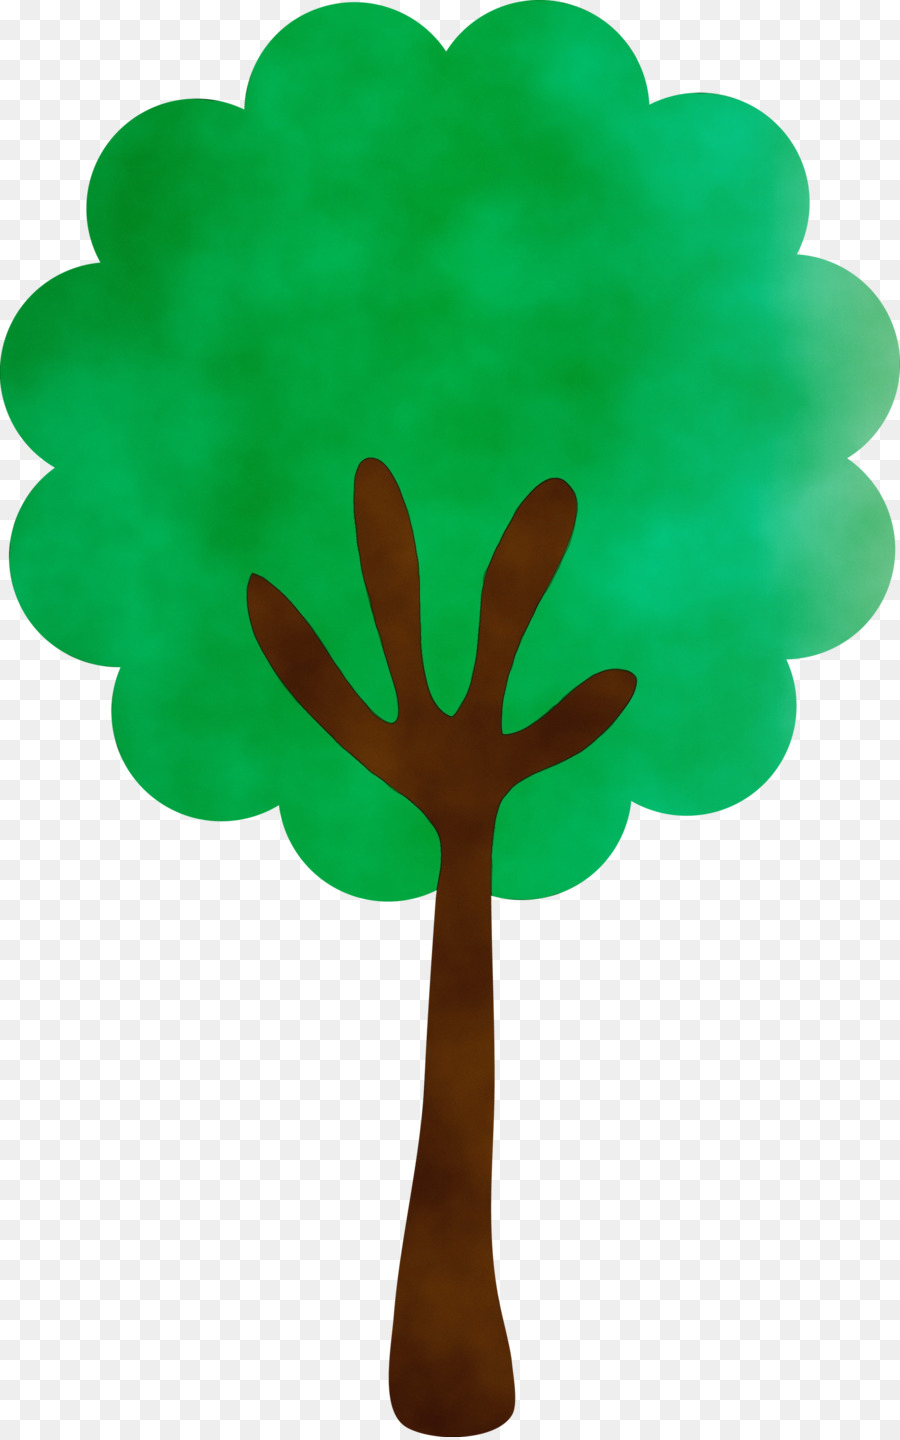 green leaf tree plant symbol